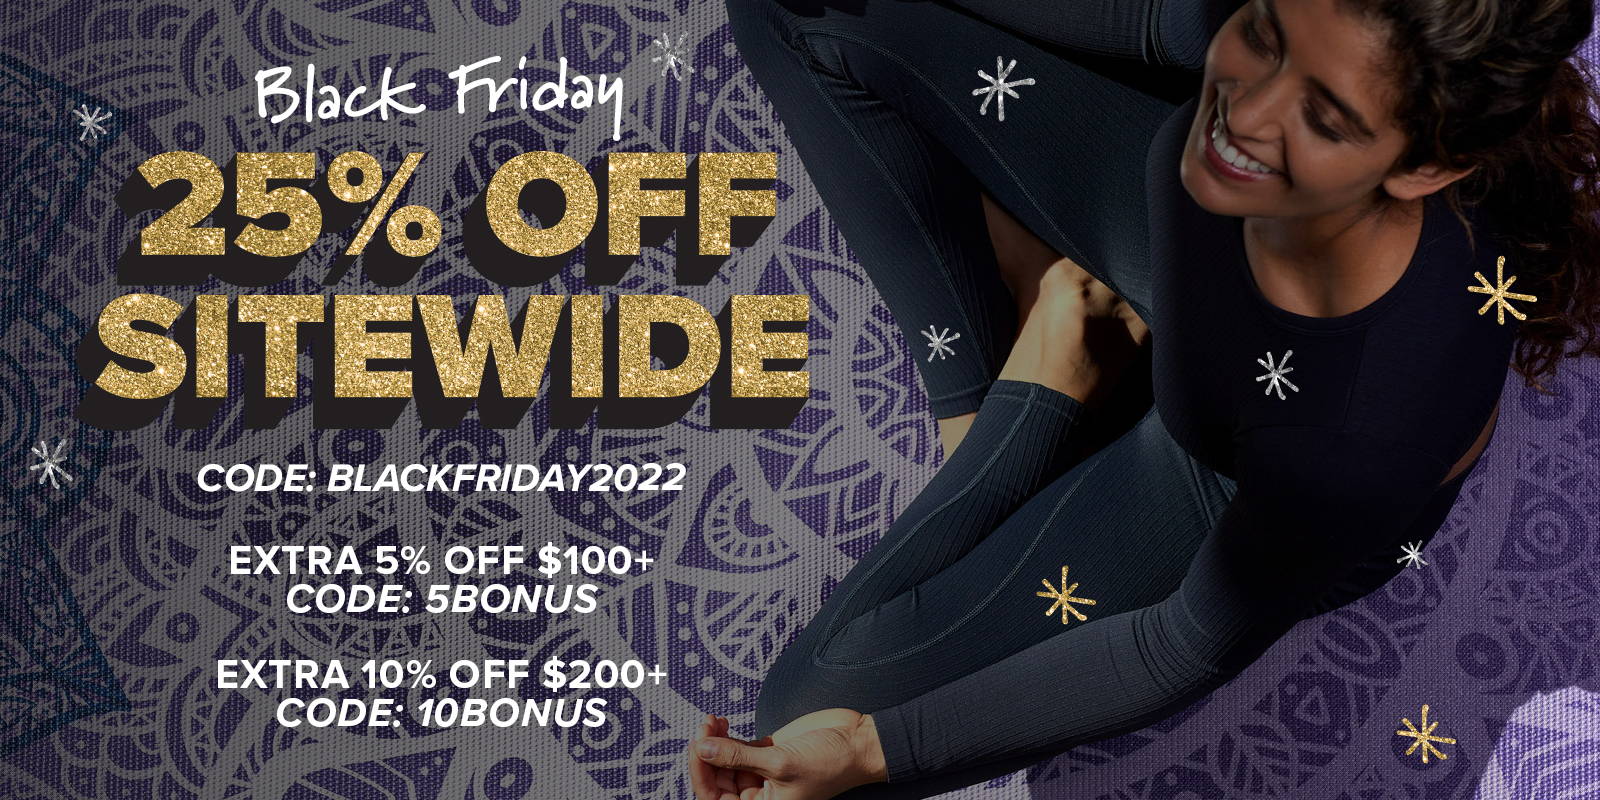 Black Friday Sale 25% off sitewide - CODE: BLACKFRIDAY2022